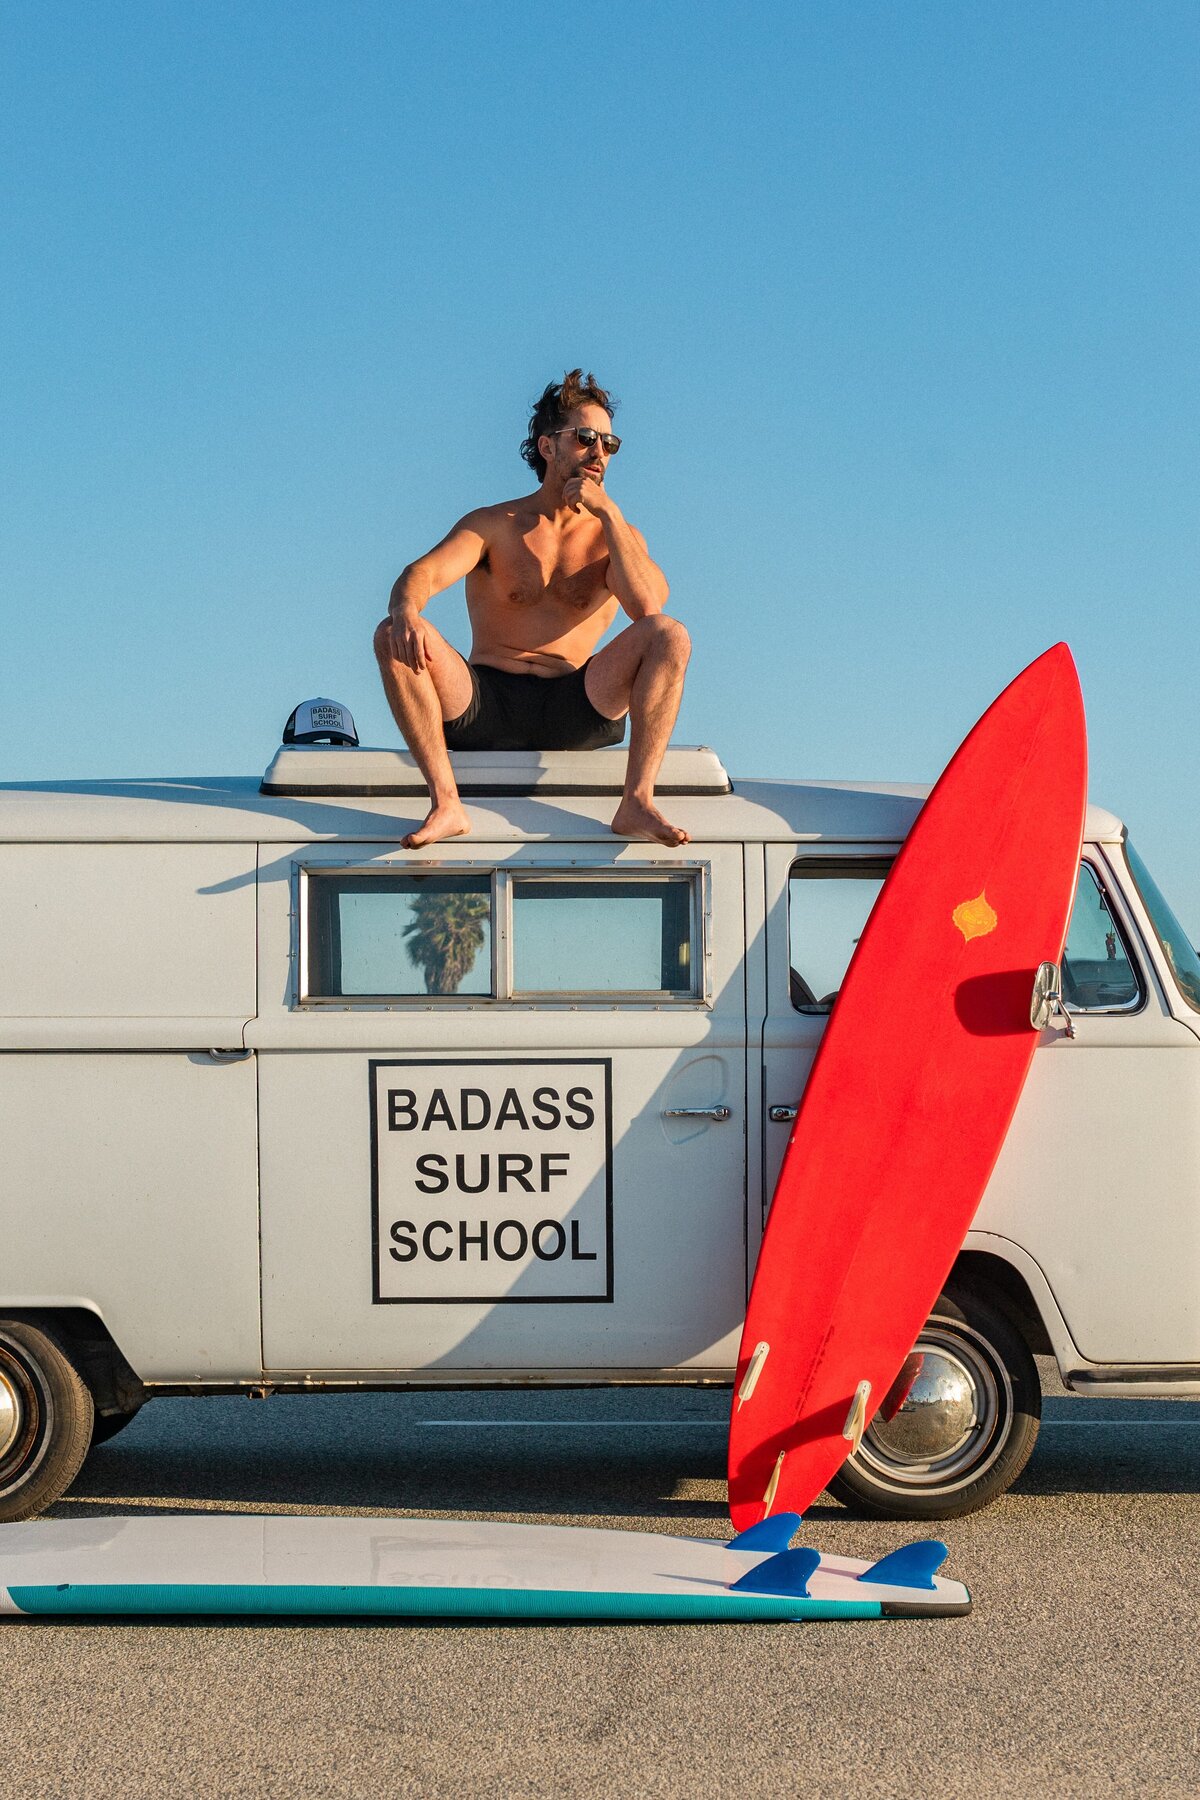 Badass-Surf-School-Venice-Beach-California-Surf-Lifestyle-Culture-045